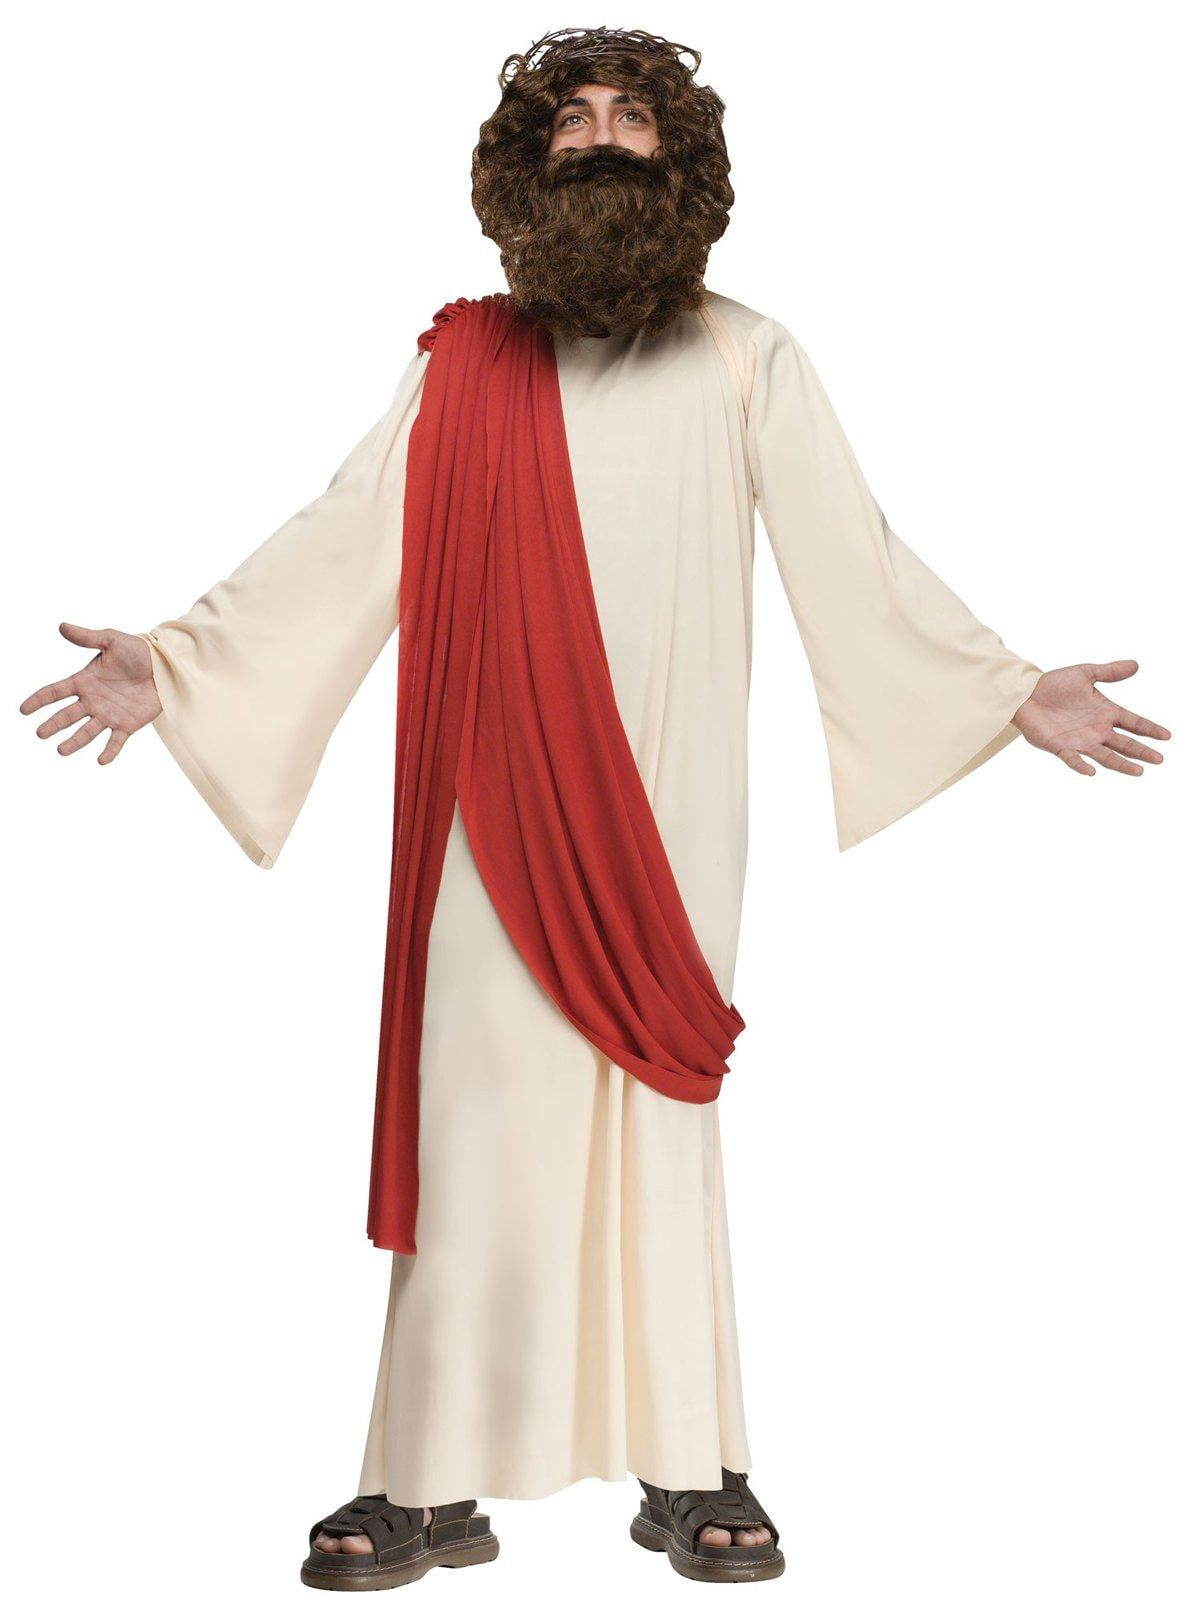 Jesus Christ Religious Biblical Adult Costume Beard and Wig Halloween Cosplay 